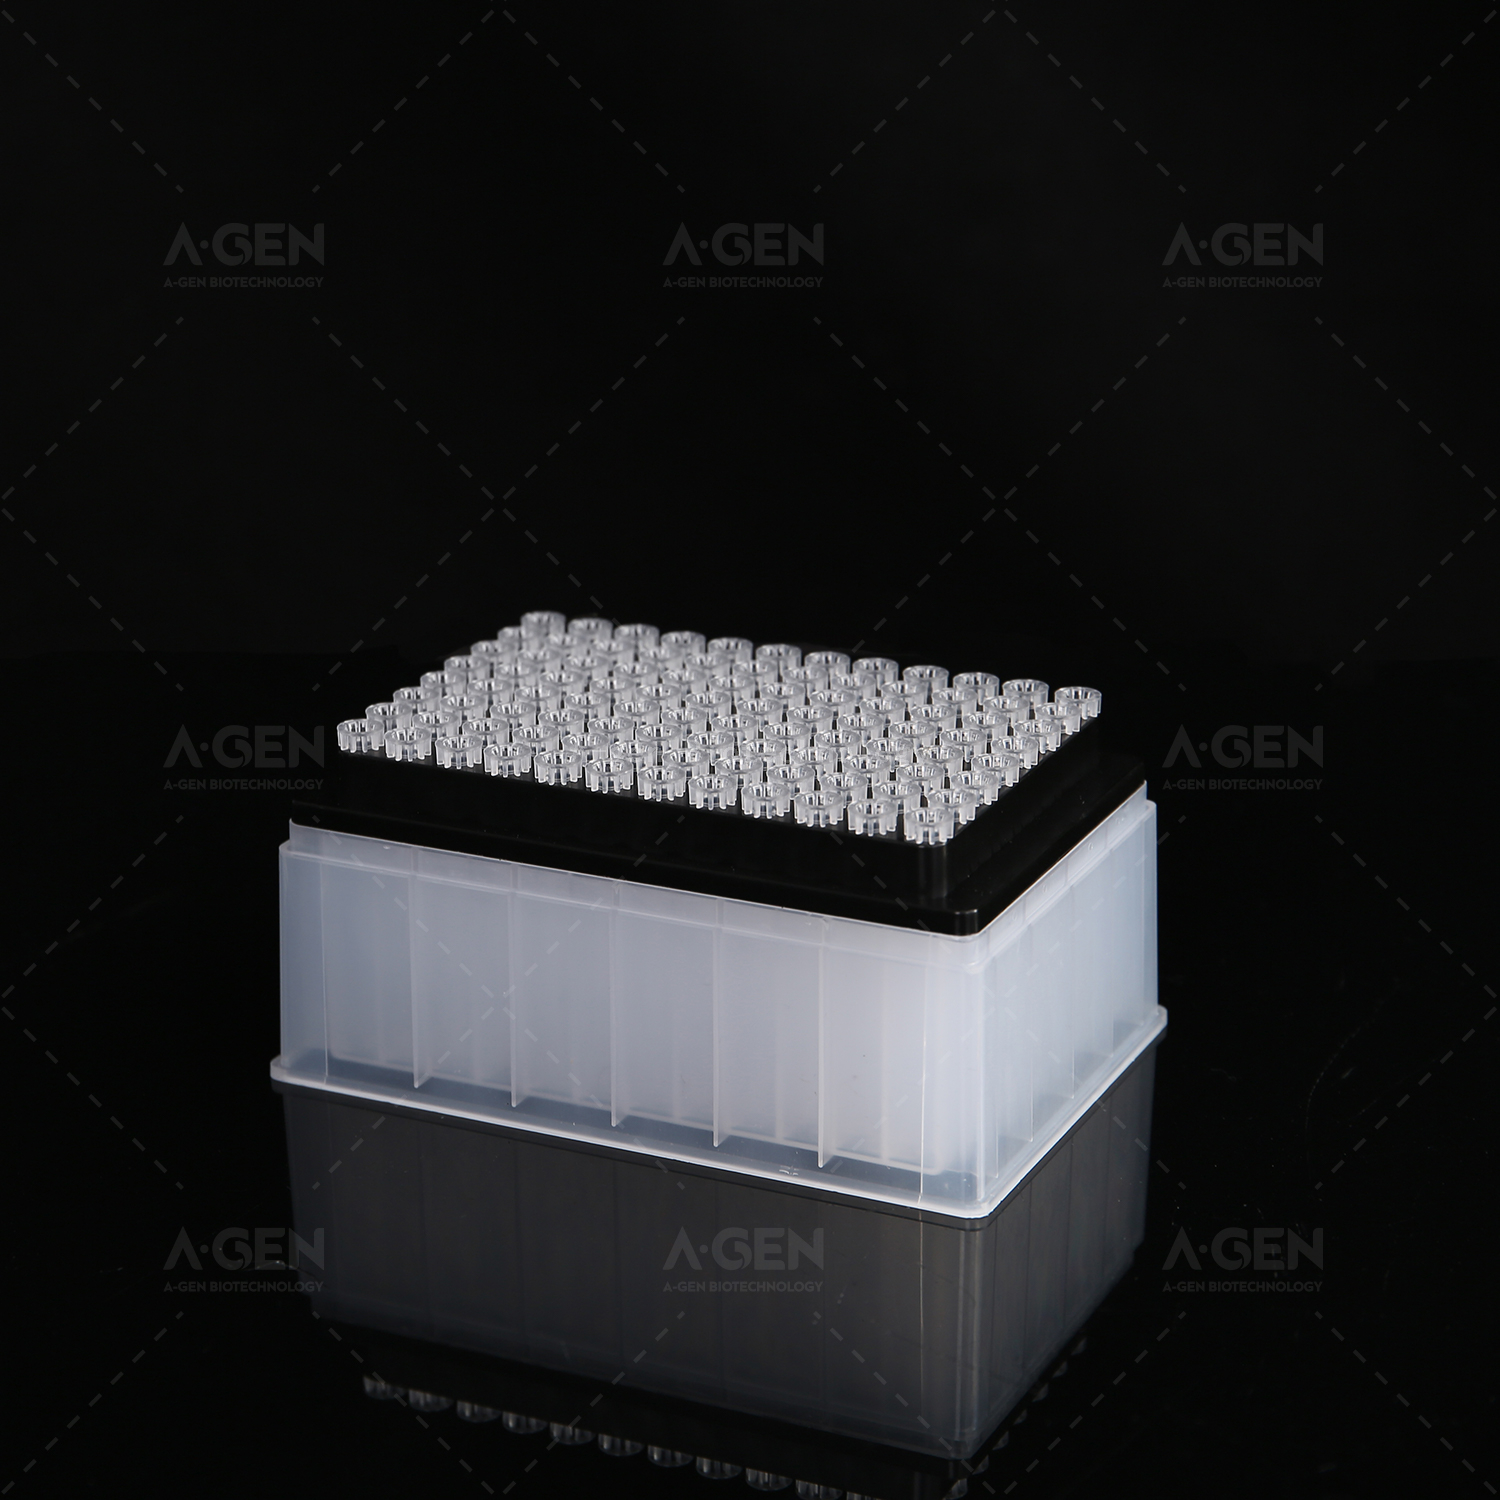 Agilent 250μL Transparent Pipette Tip (Racked,sterilized, Low Retention) for Liquid Transfer VT-250-RSL No Filter